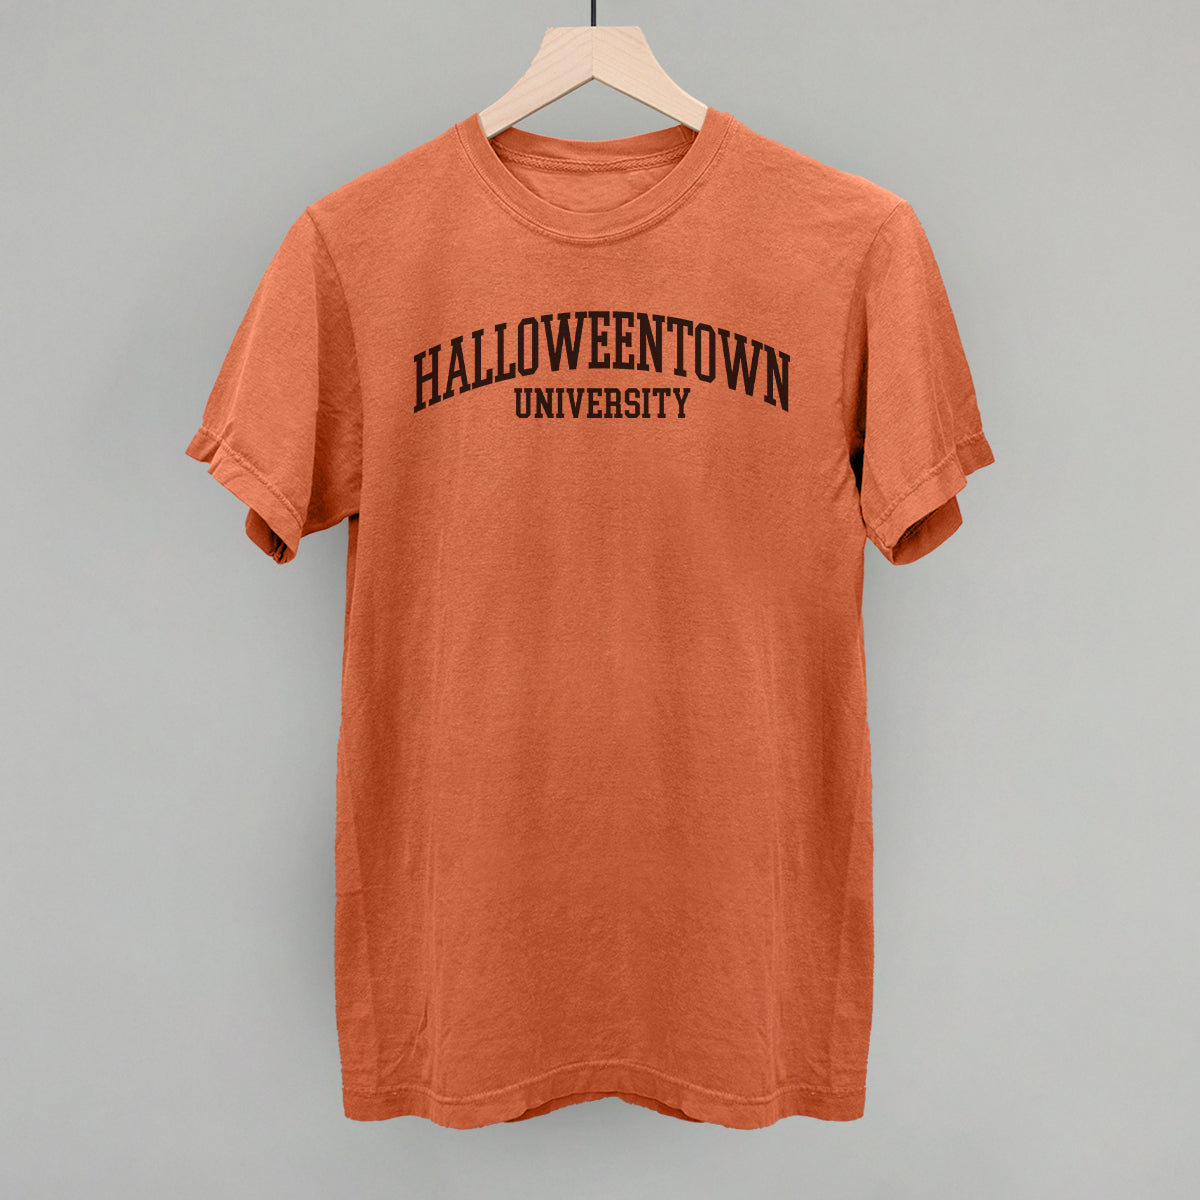 Halloweentown University College Block